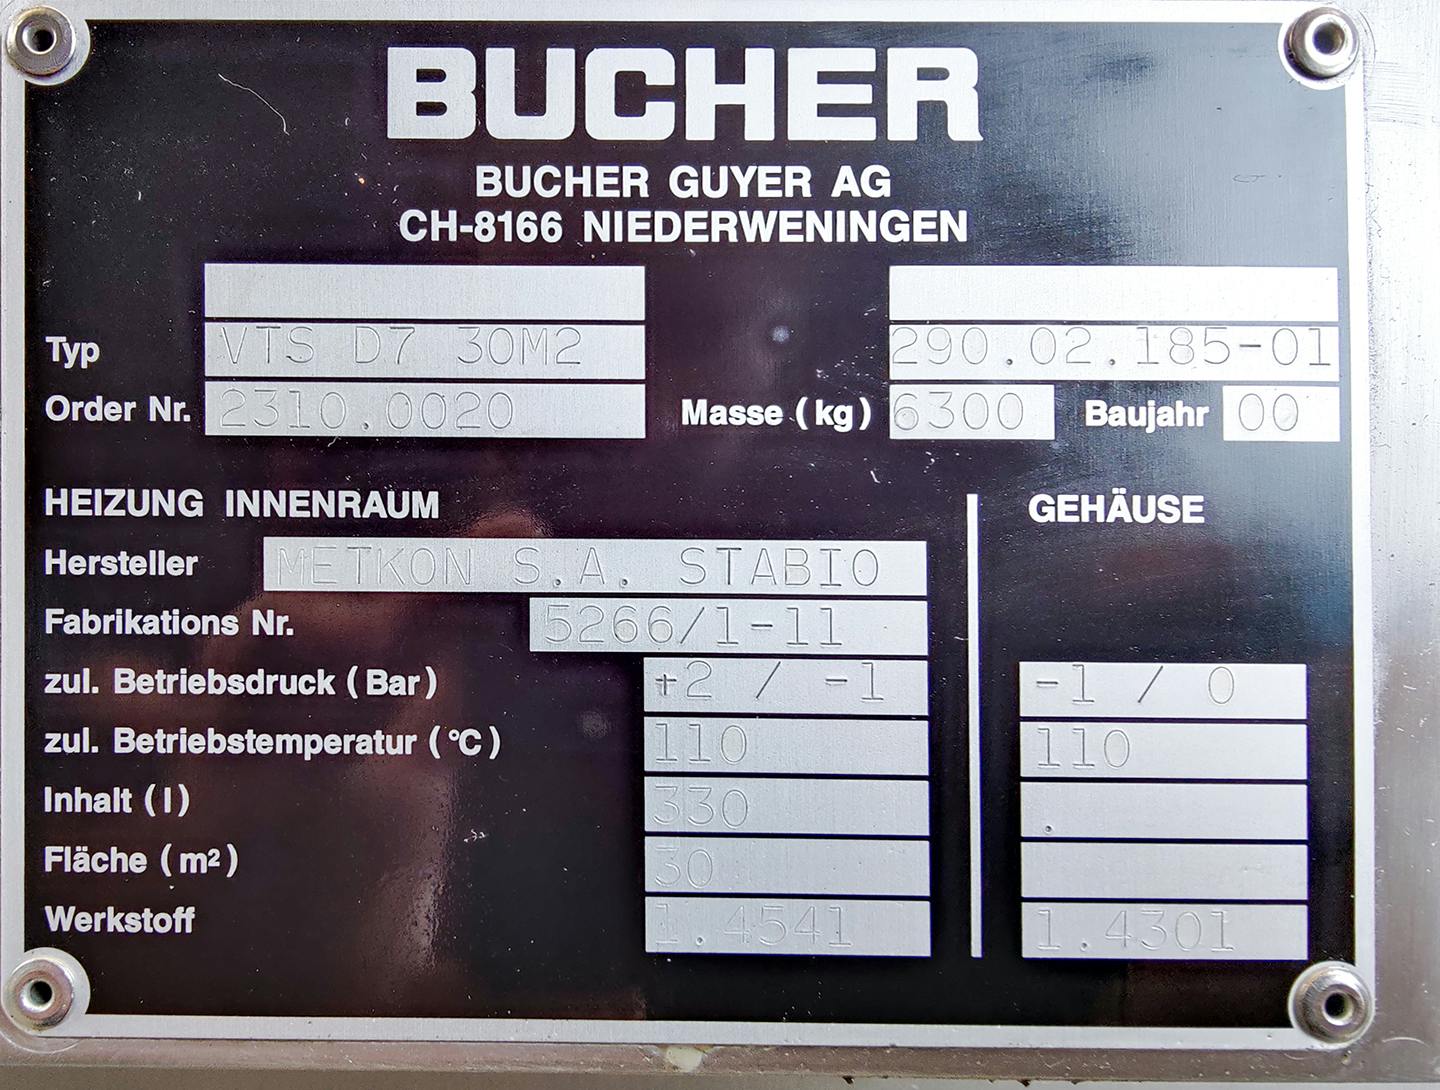 Bucher VTS-D7 30m2 - Essiccatore a vassoio - image 8